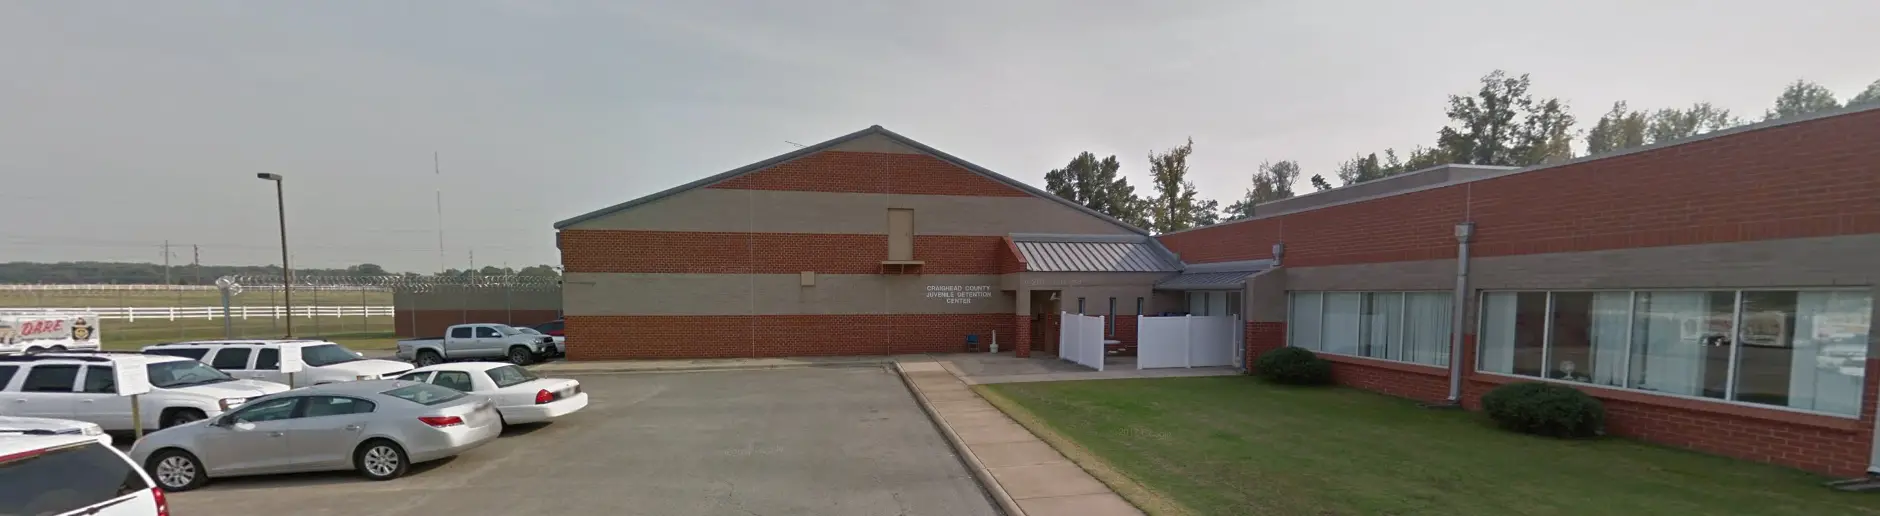 Craighead Juvenile & Adult Detention Center